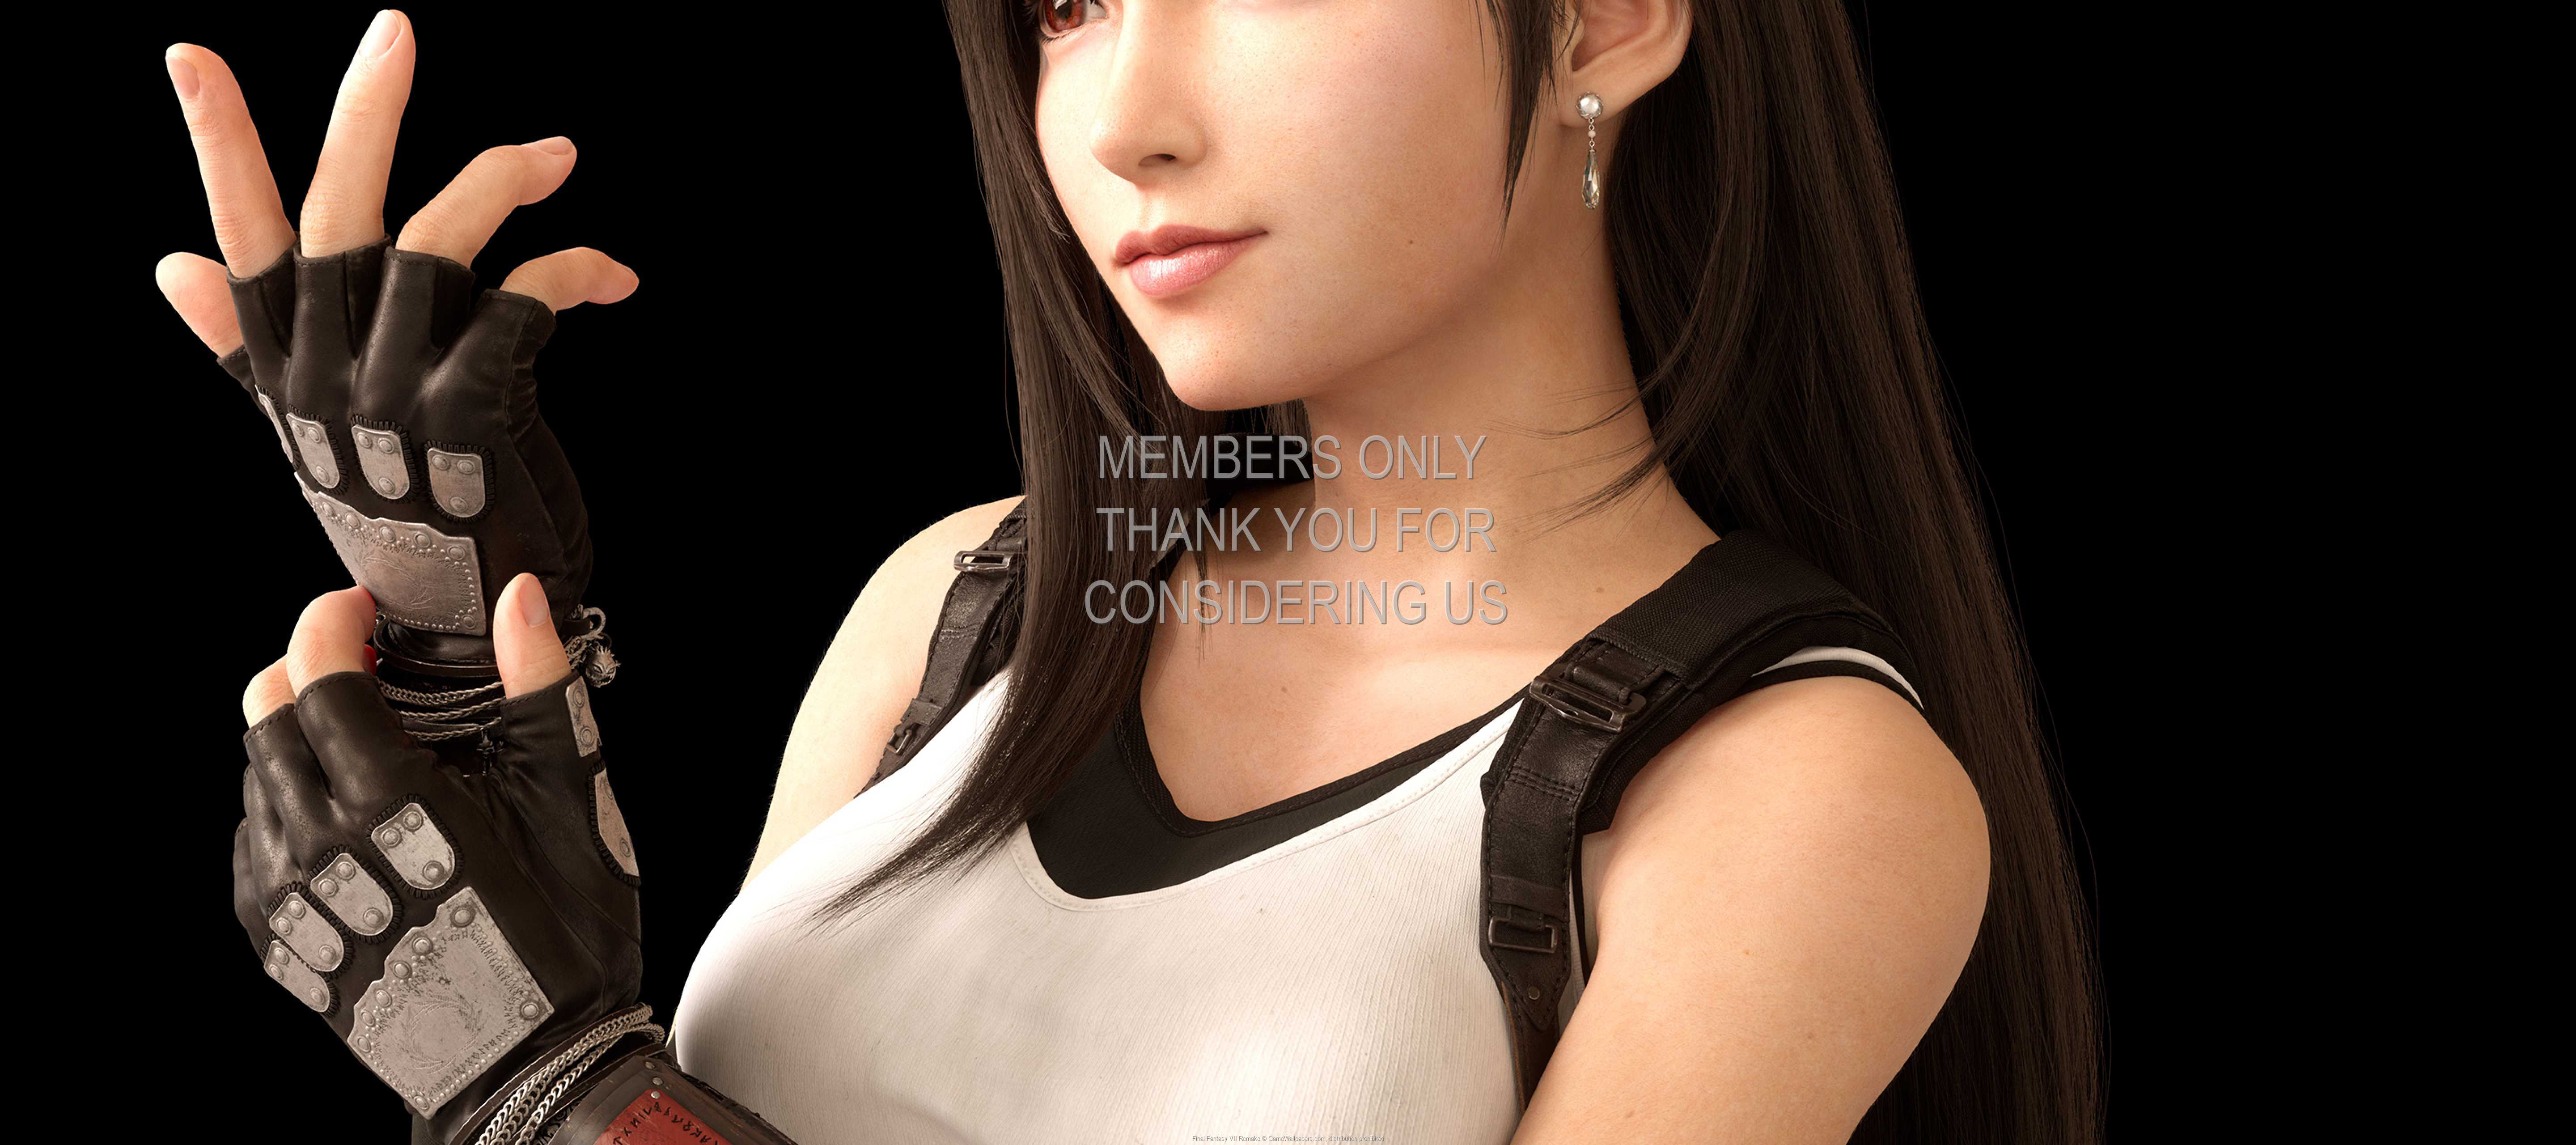 Final Fantasy VII Remake 1440p%20Horizontal Mobile wallpaper or background 01